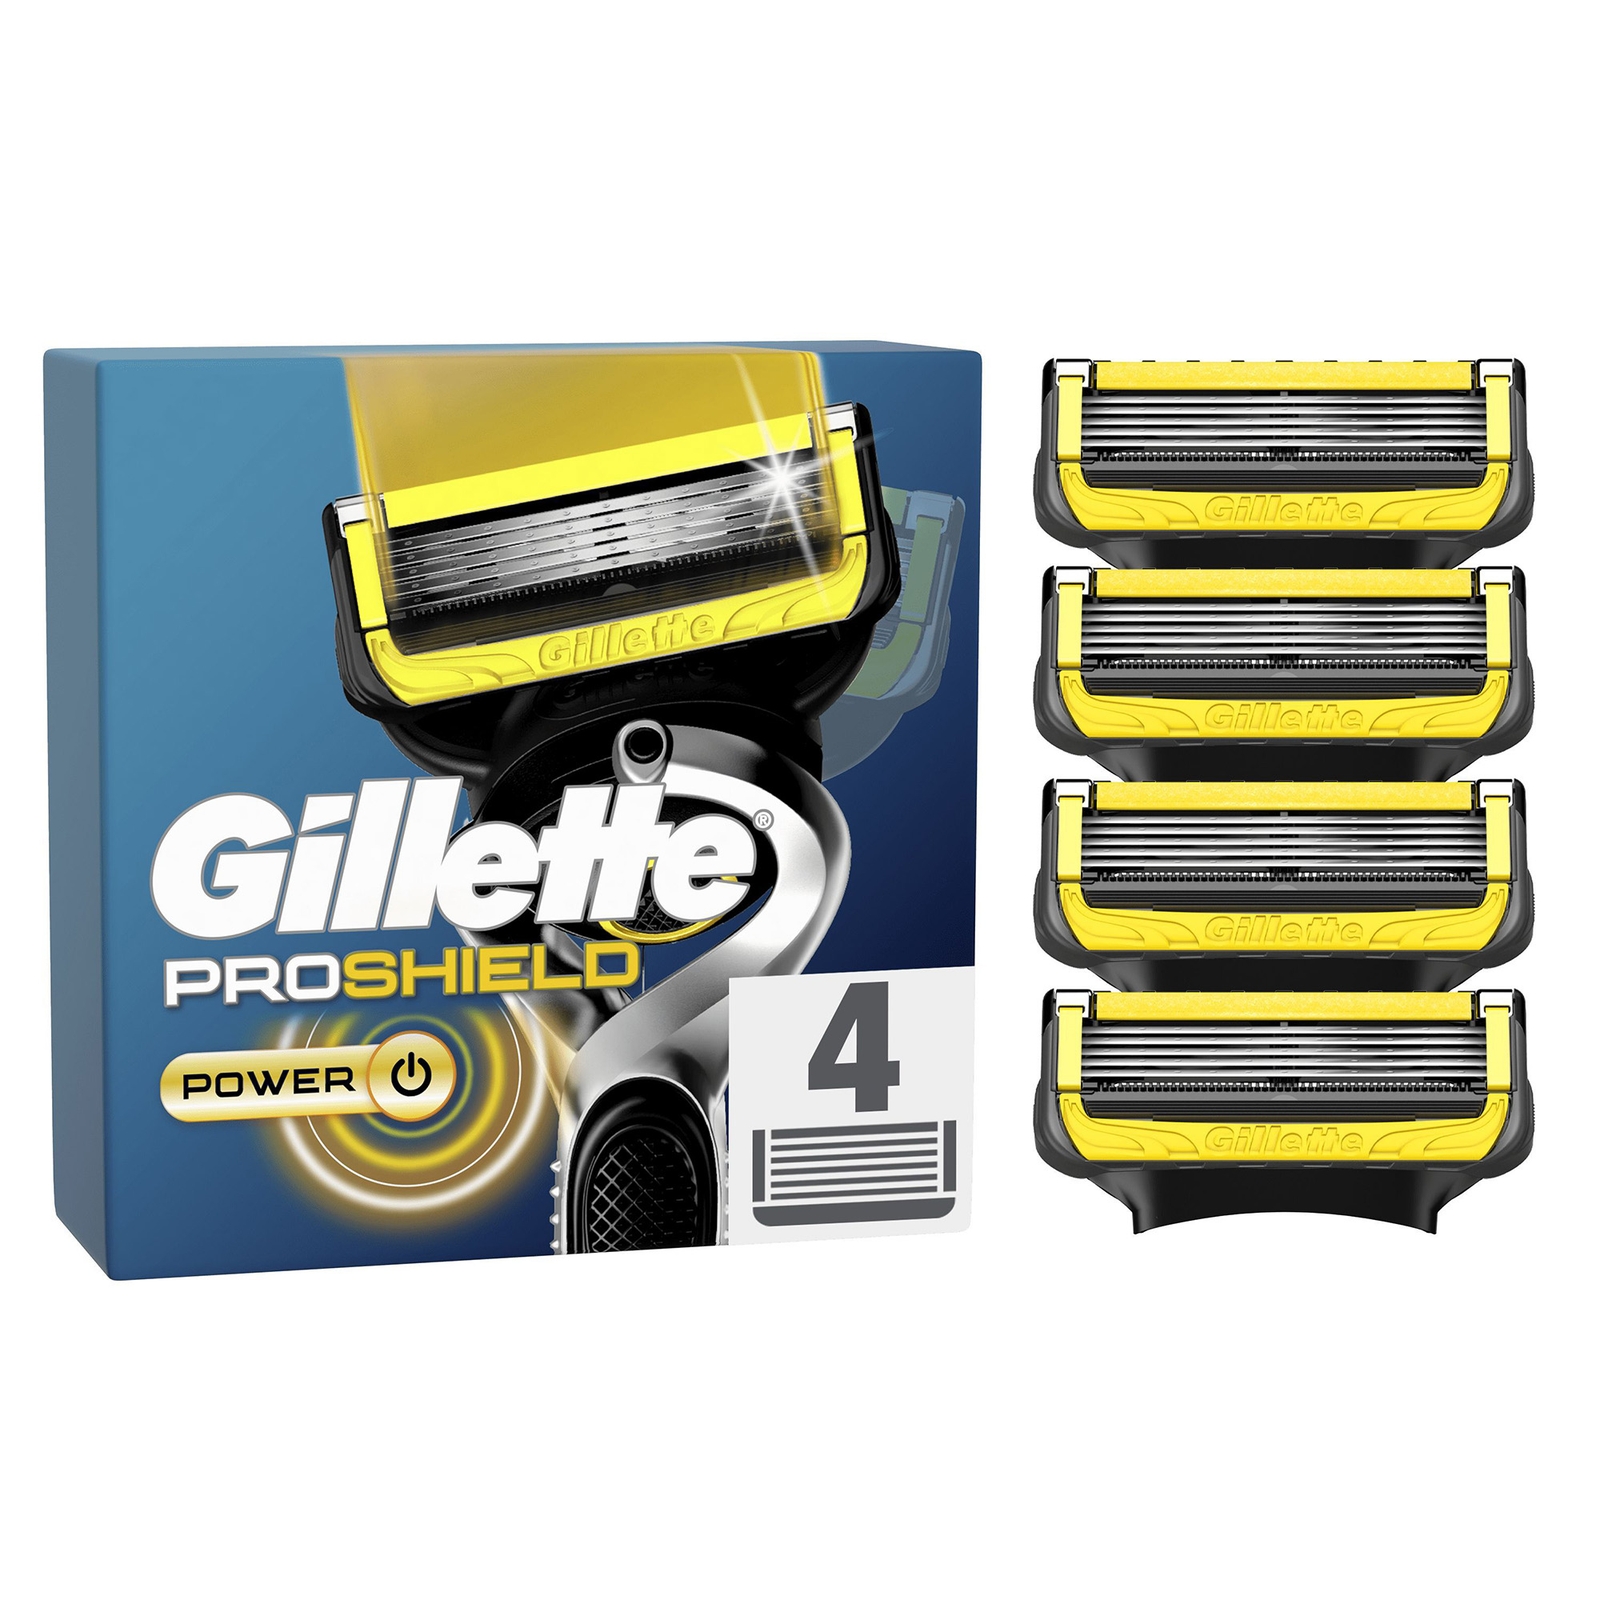 Gillette ProShield Power Razor Blades - 4 Pack